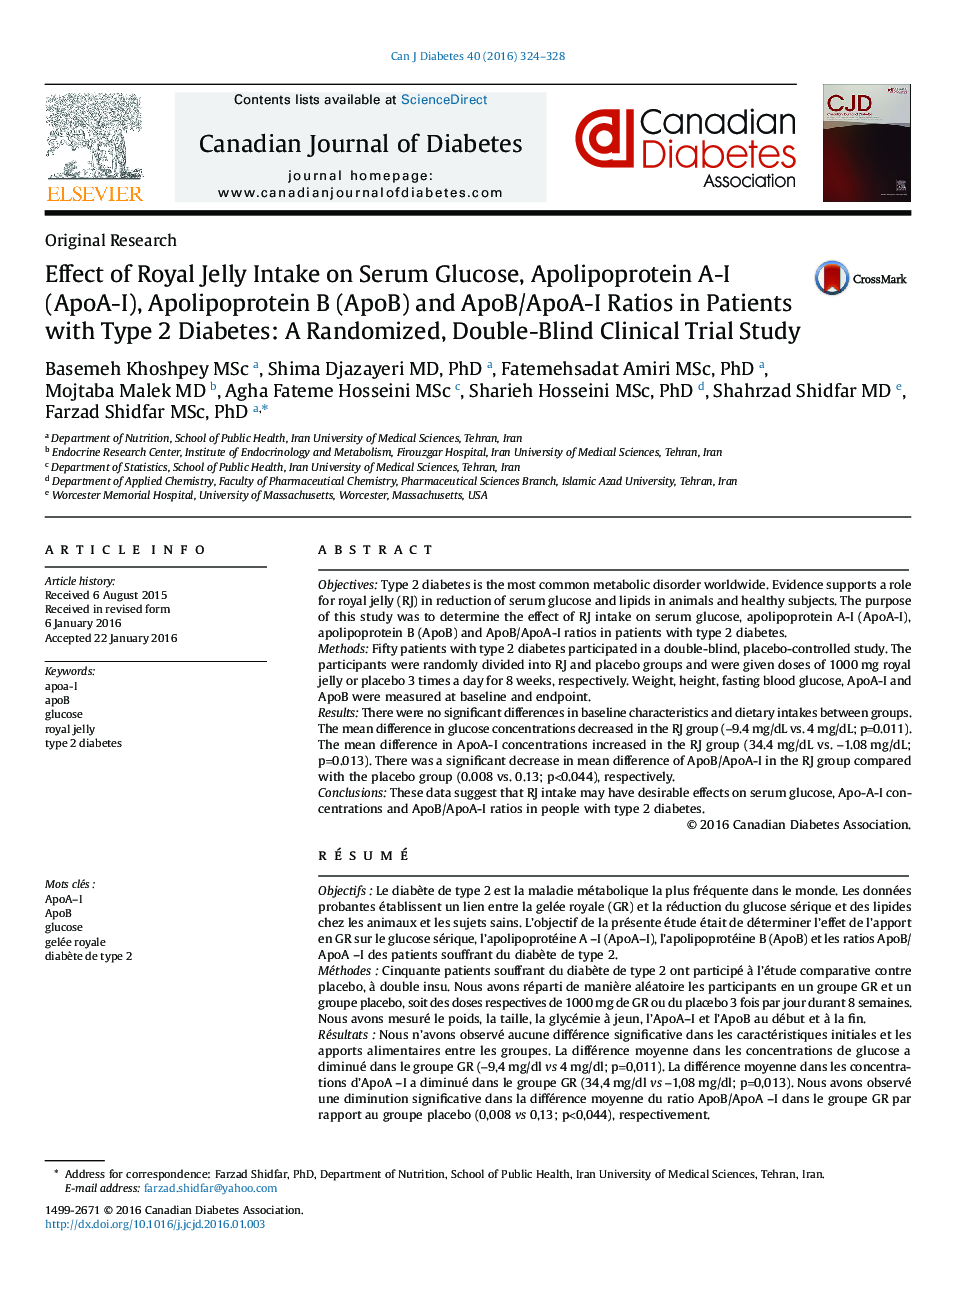 Effect of Royal Jelly Intake on Serum Glucose, Apolipoprotein A-I (ApoA-I), Apolipoprotein B (ApoB) and ApoB/ApoA-I Ratios in Patients with Type 2 Diabetes: A Randomized, Double-Blind Clinical Trial Study